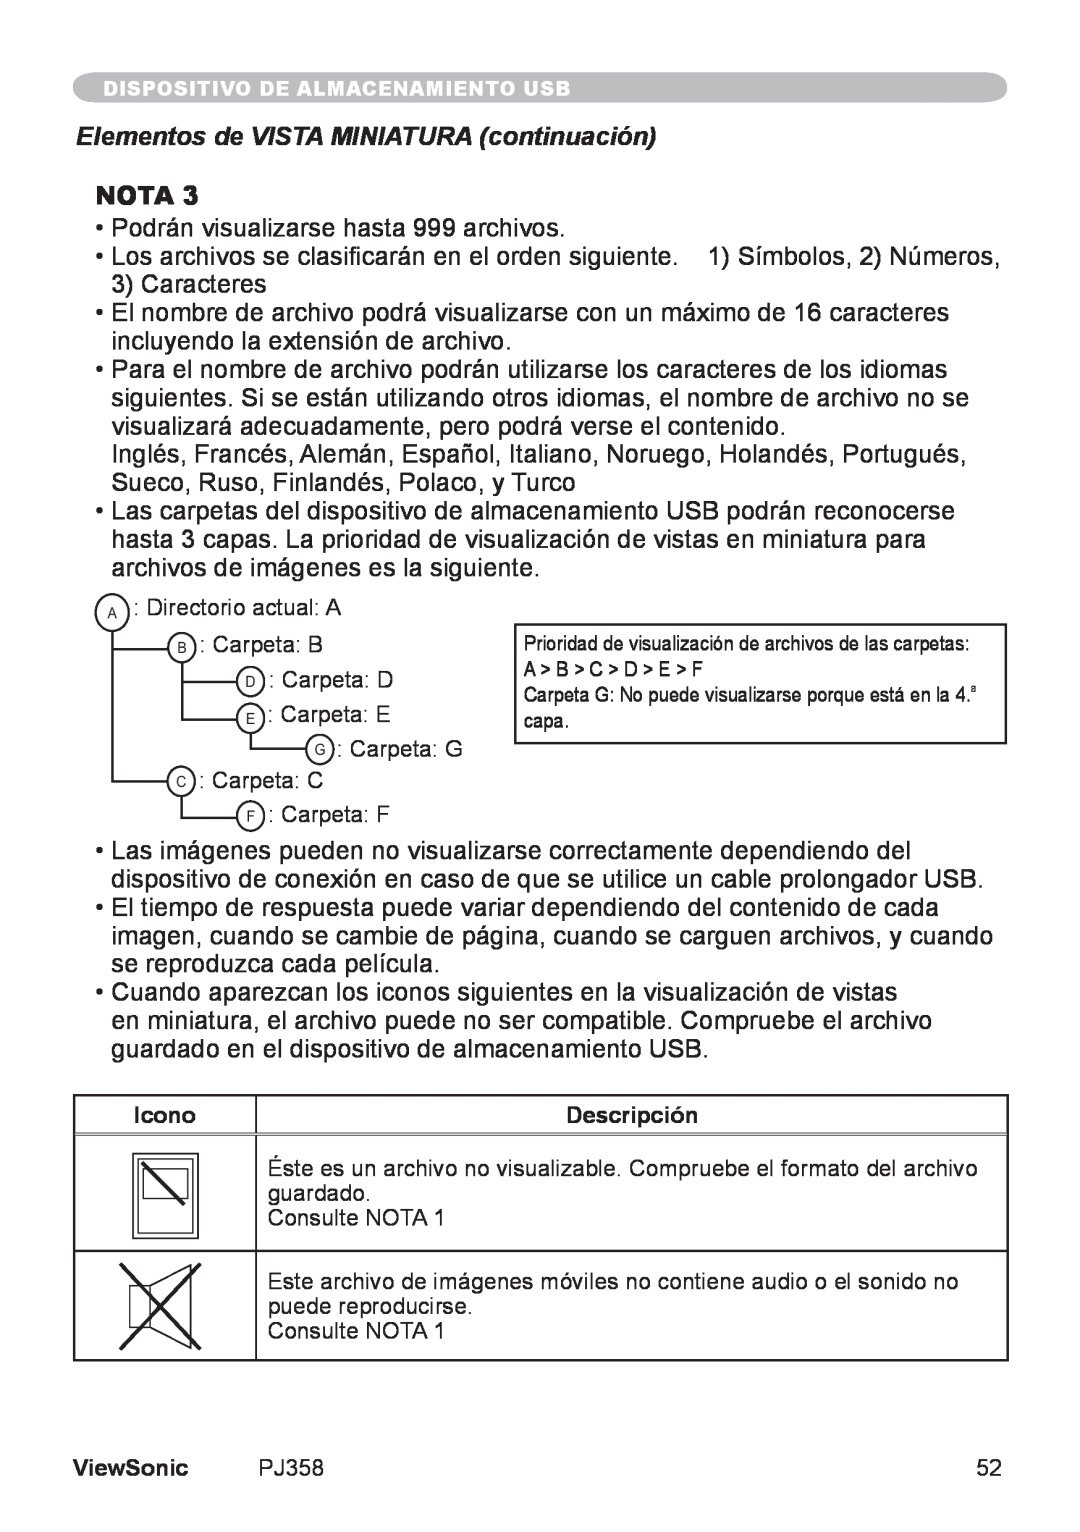 ViewSonic PJ358, VS11611 manual Elementos de VISTA MINIATURA continuación, Nota 